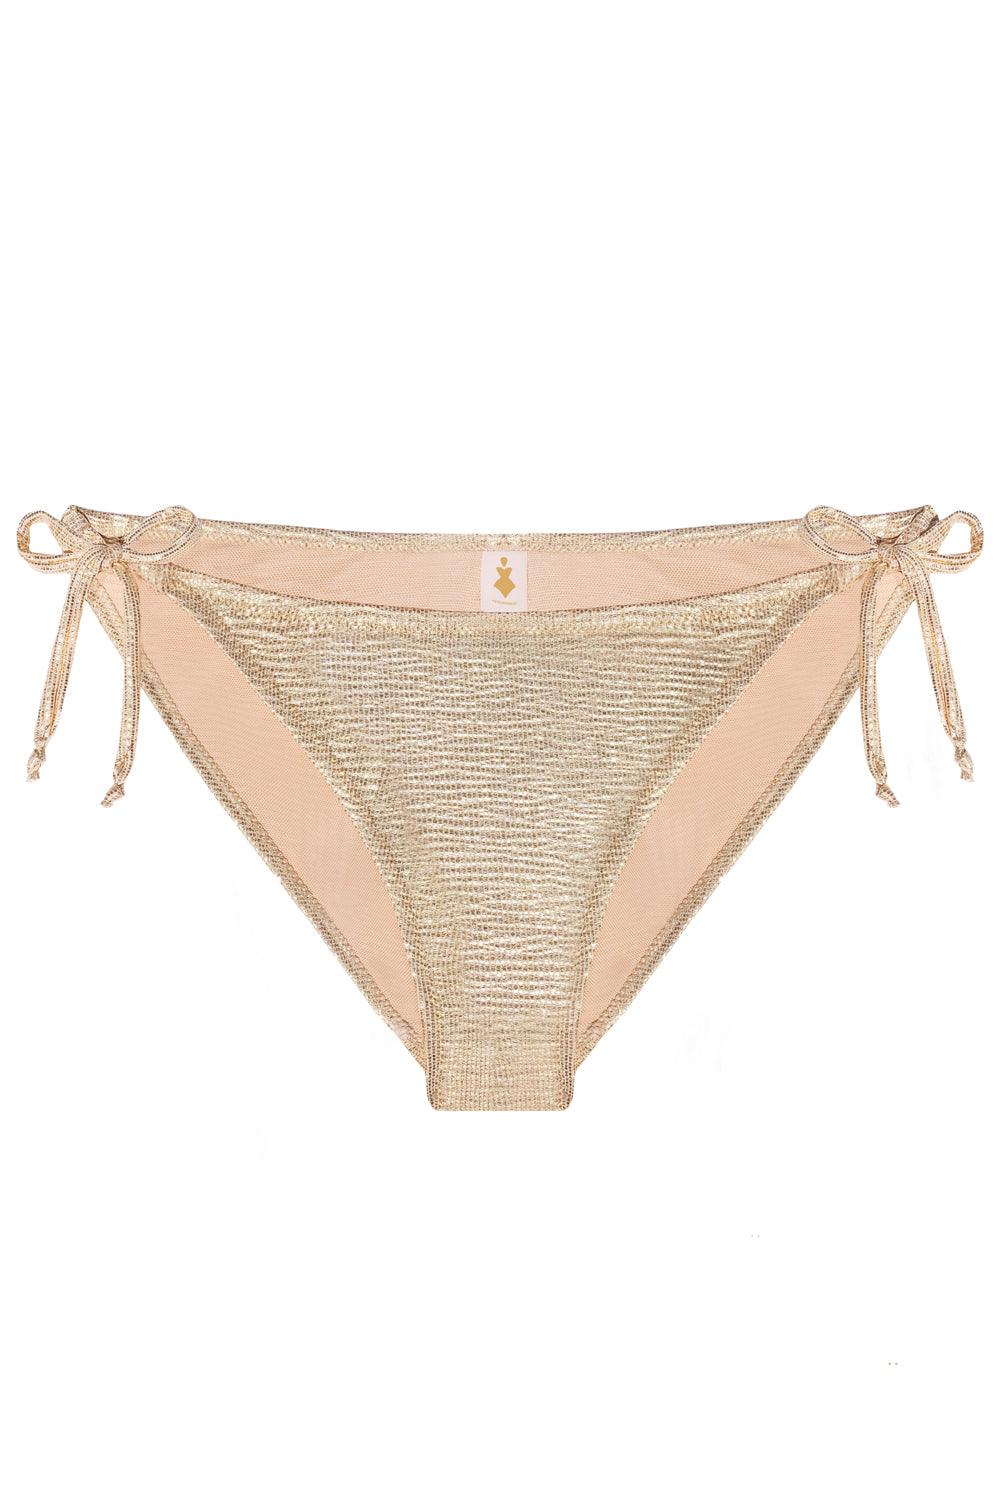 Cressida Gold bikini bottom - Bikini bottom by yesUndress. Shop on yesUndress